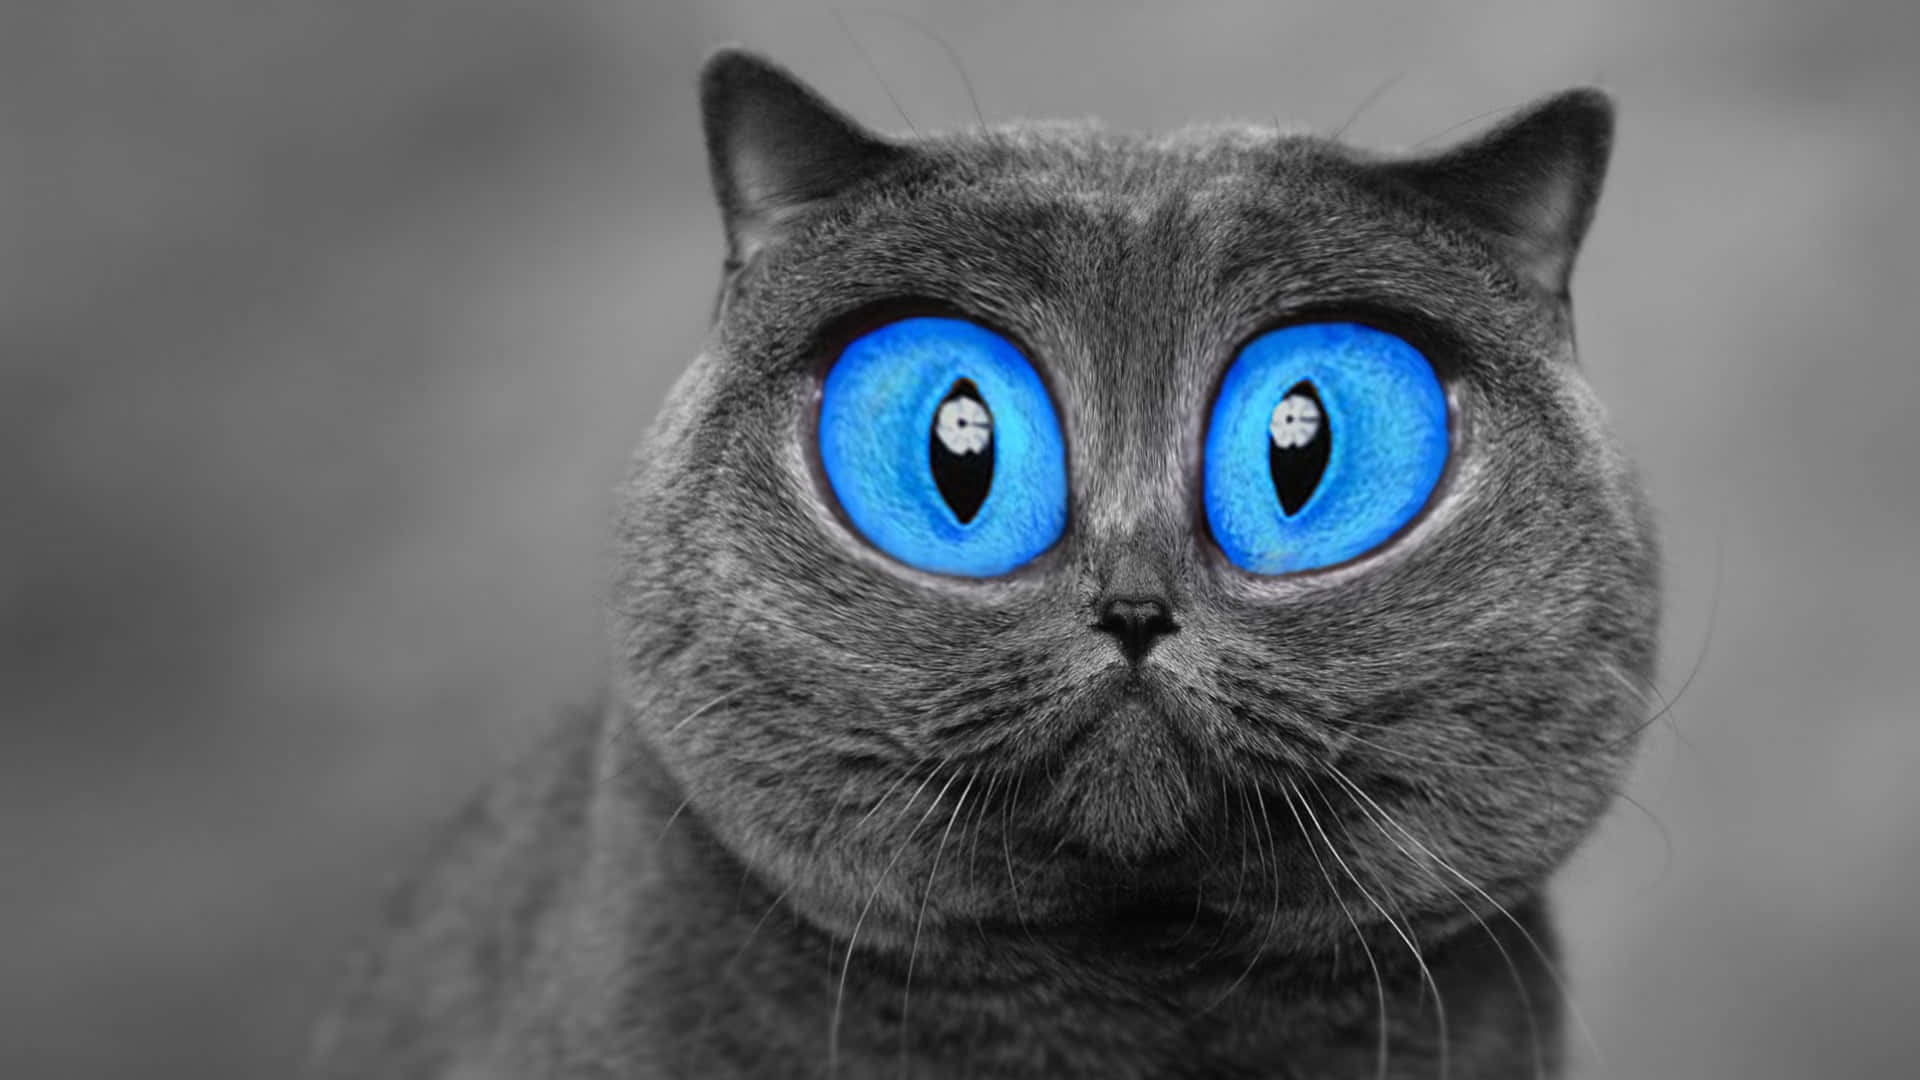 Caption: Dazzling Blue Cat Eyes Of A British Shorthair